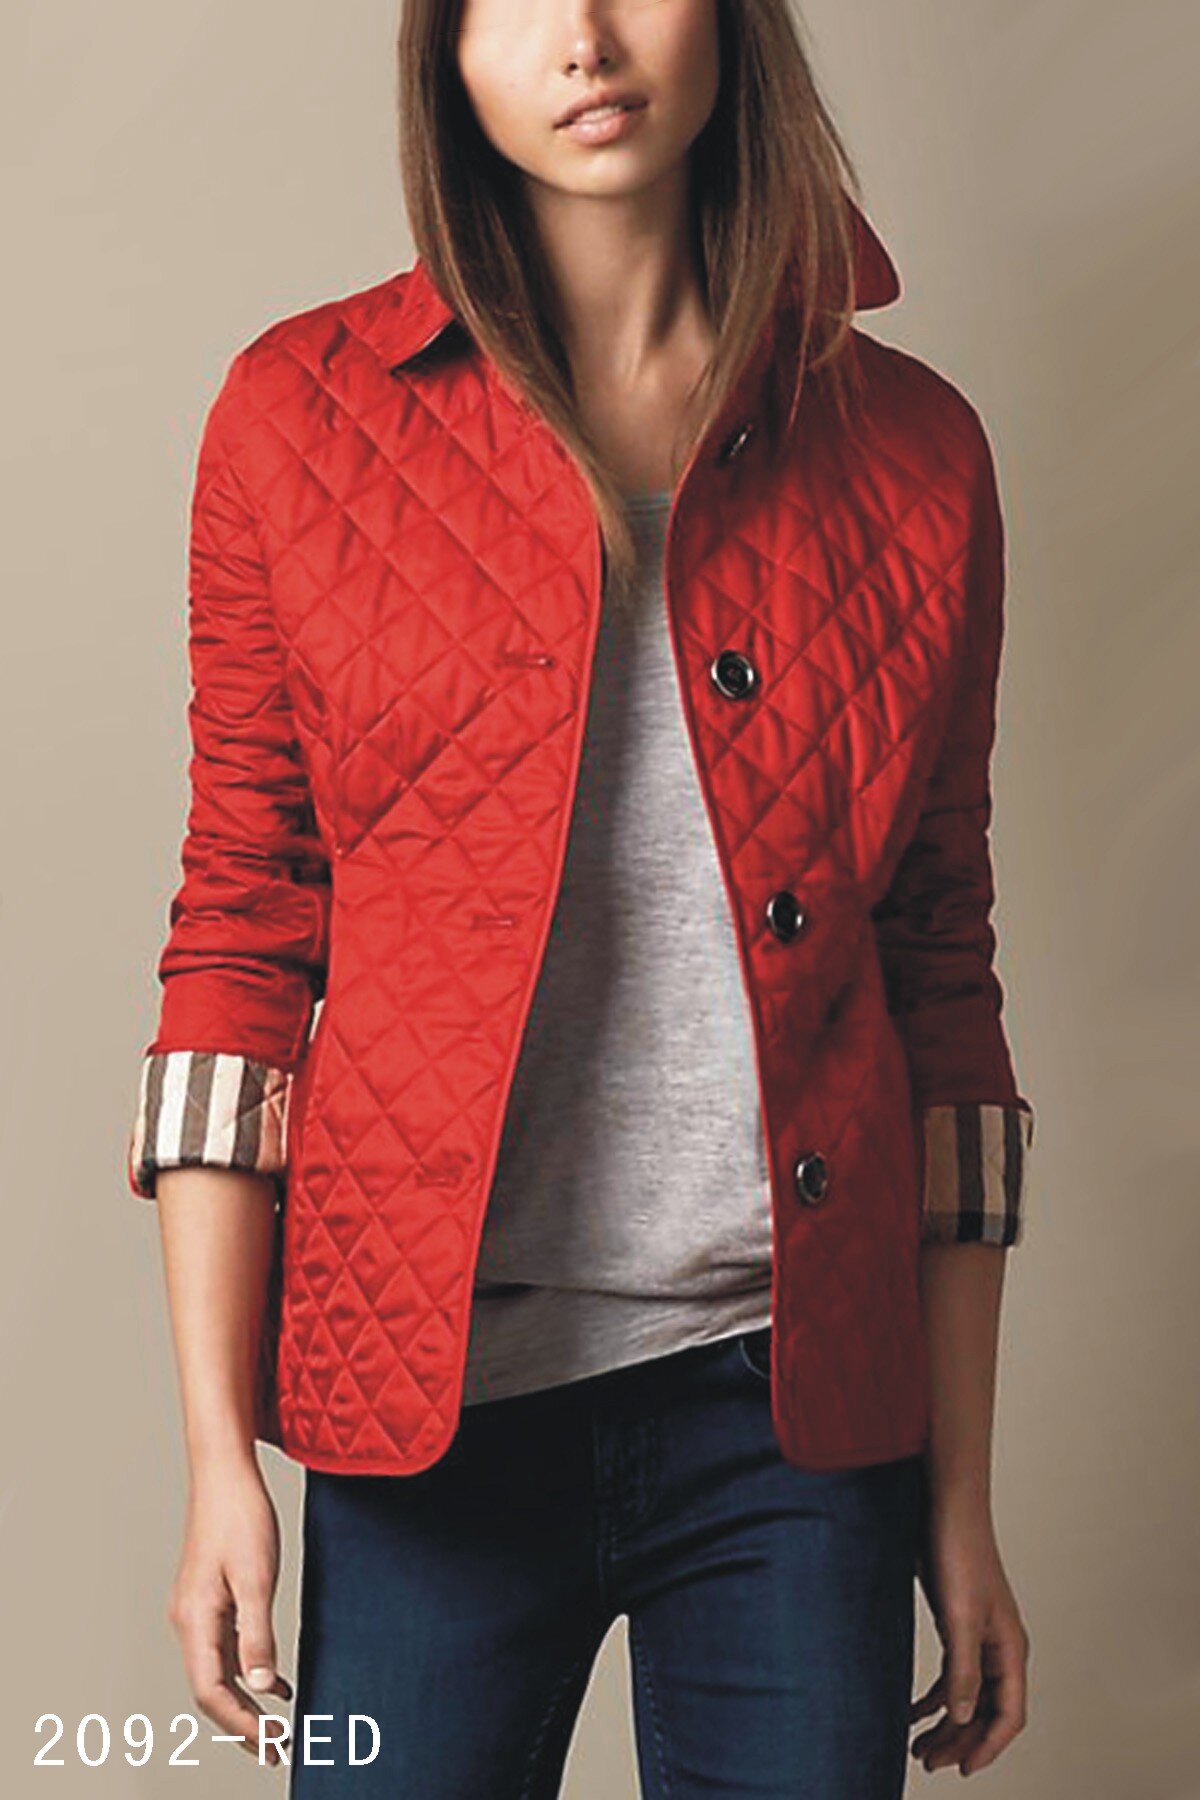 23-Women's Jackets Designer Jackets Winter Autumn Coat Fashion Slim Jacket Plug Size S- XXXL